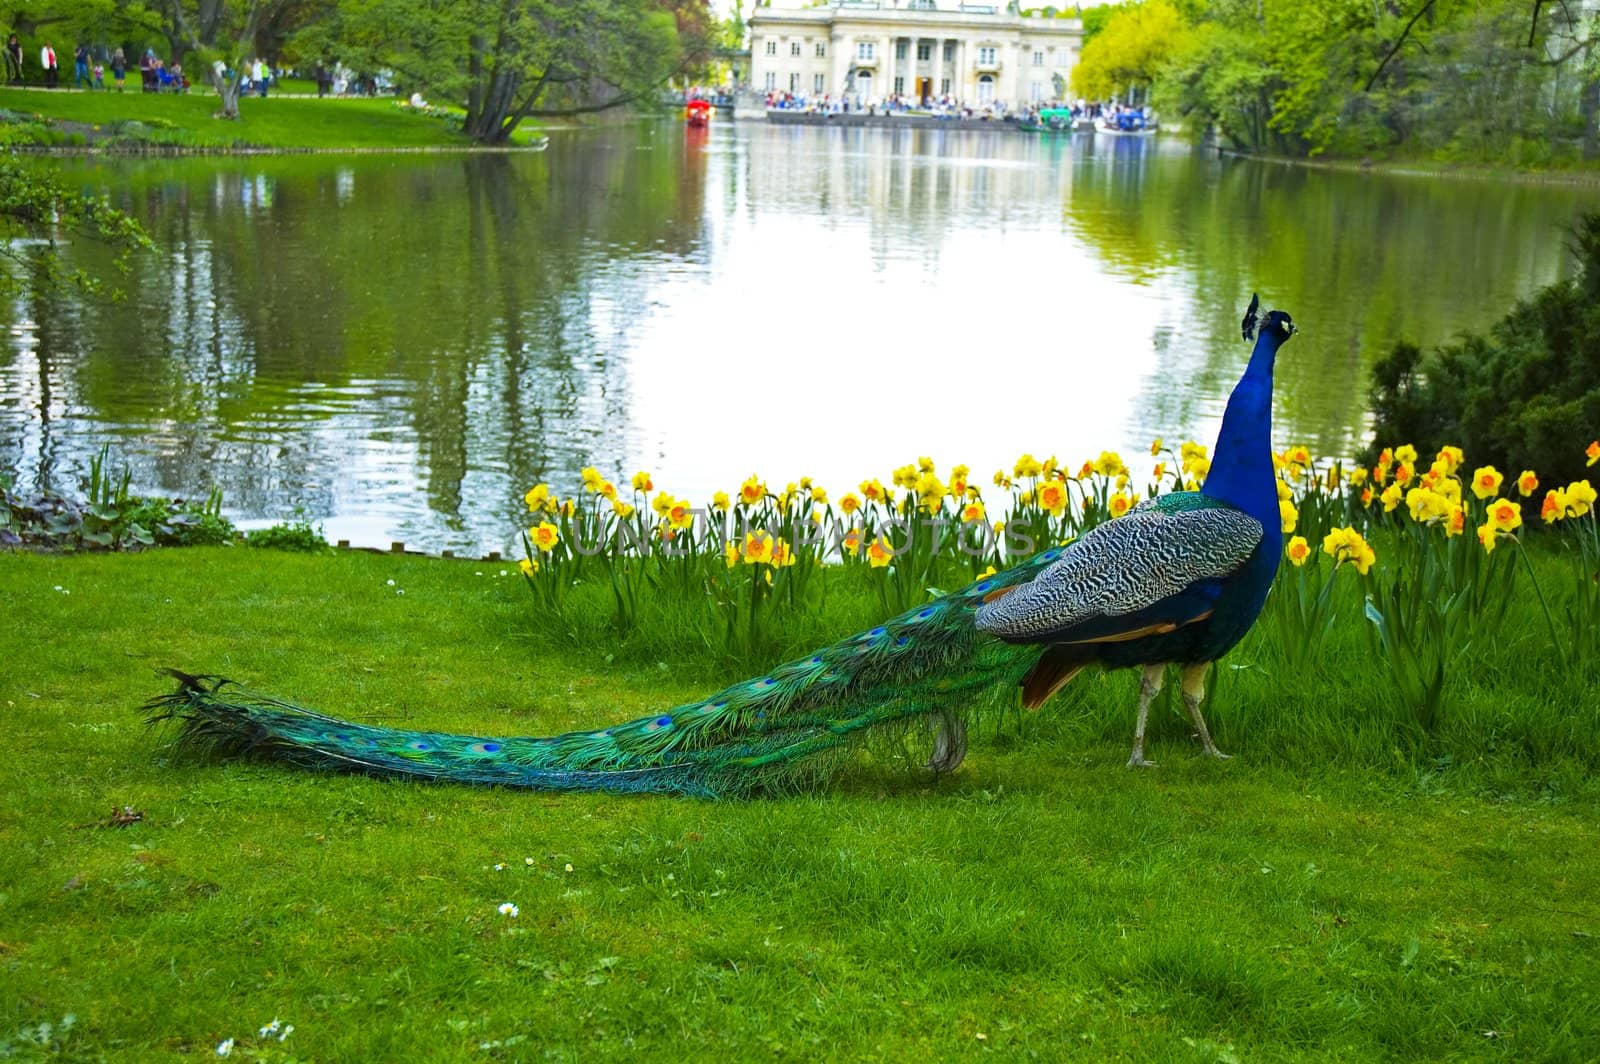 Peacock by Michalowski